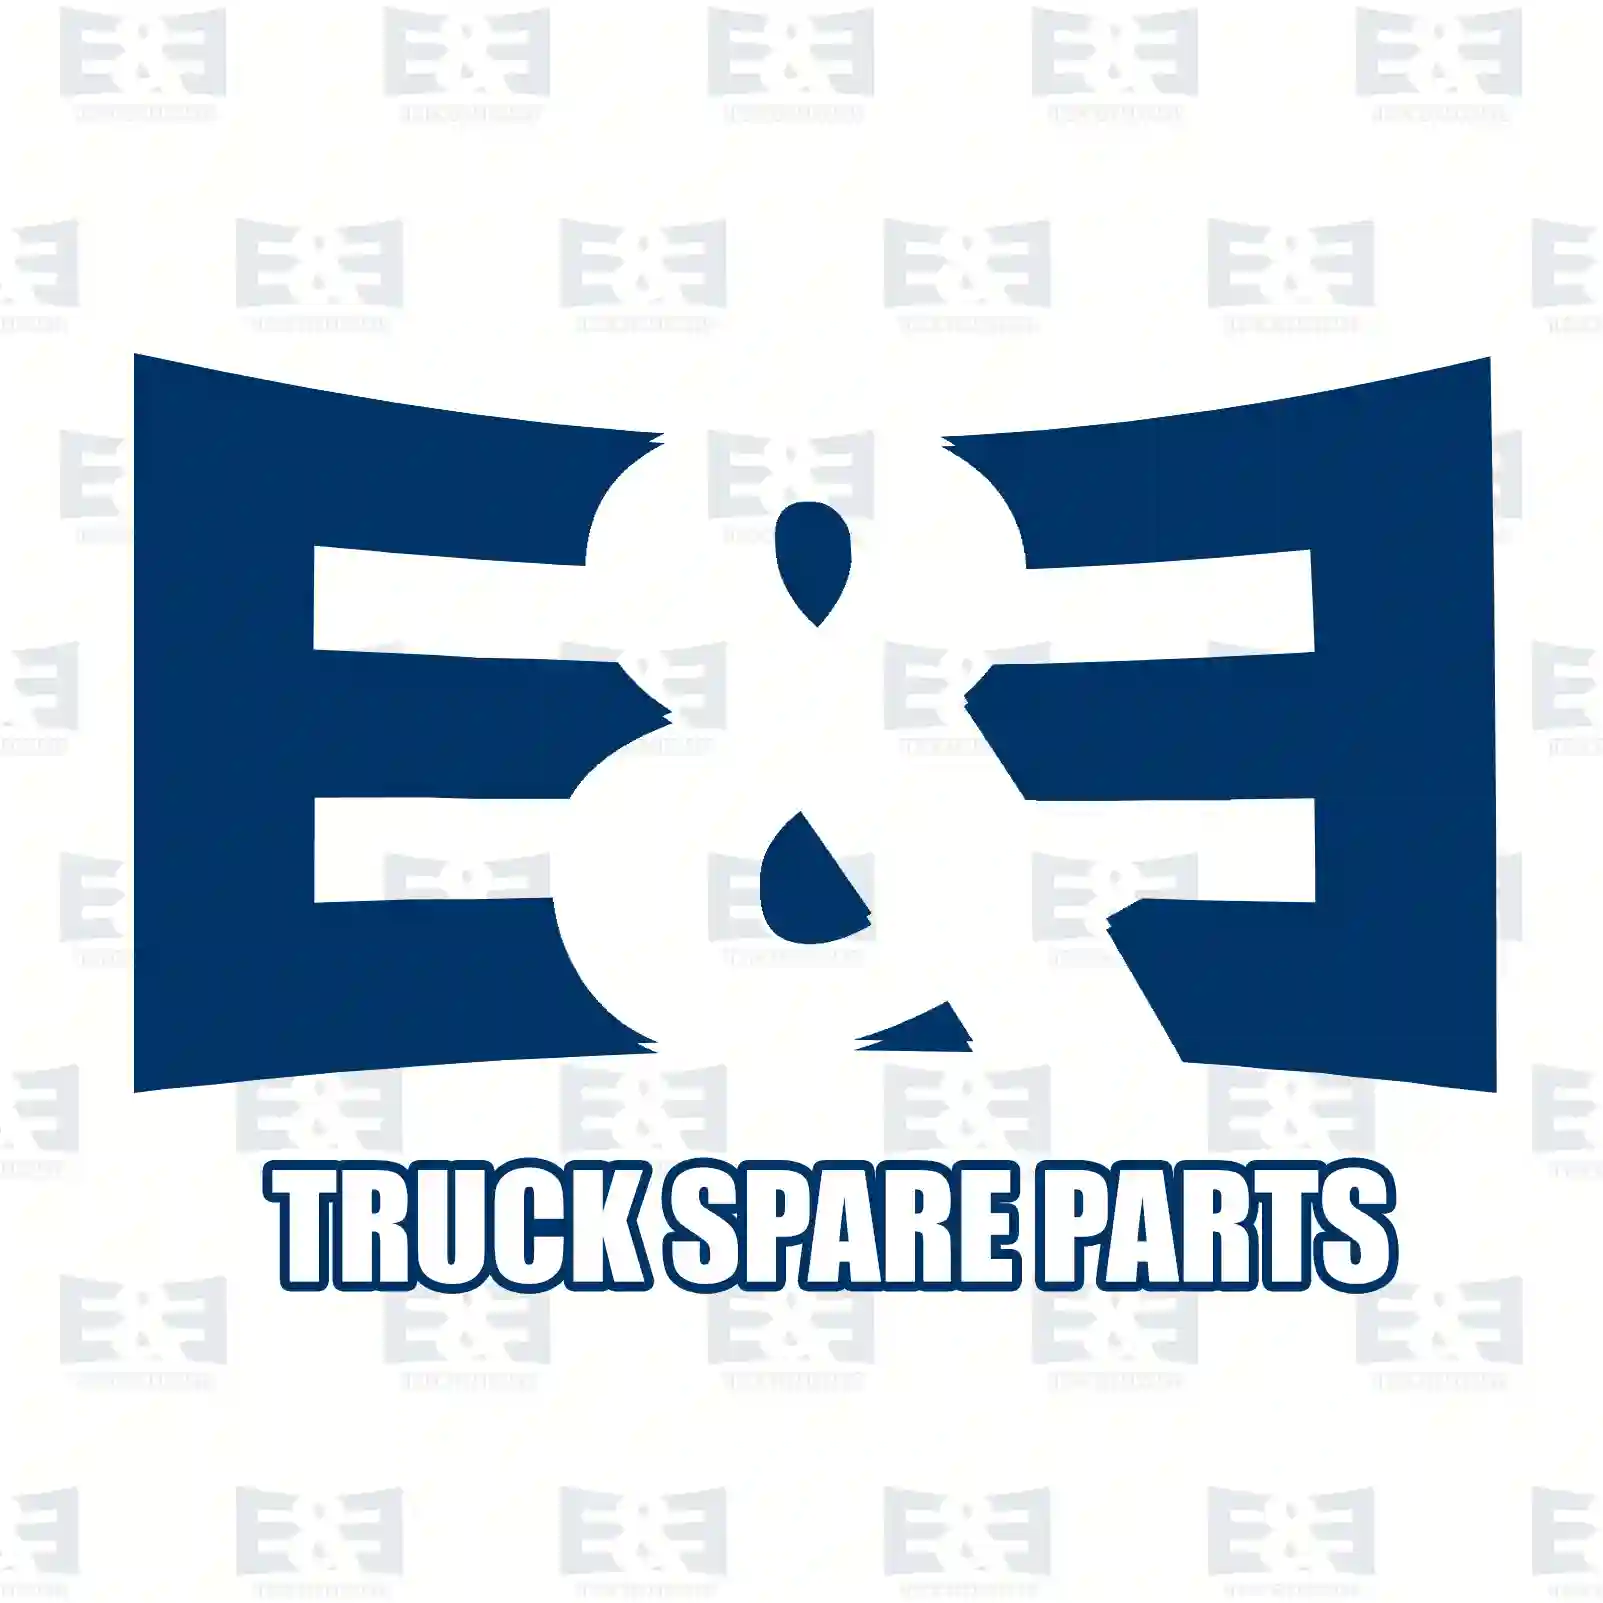 Air Tank Relief valve, EE No 2E2296540 ,  oem no:2274810, 44845 E&E Truck Spare Parts | Truck Spare Parts, Auotomotive Spare Parts